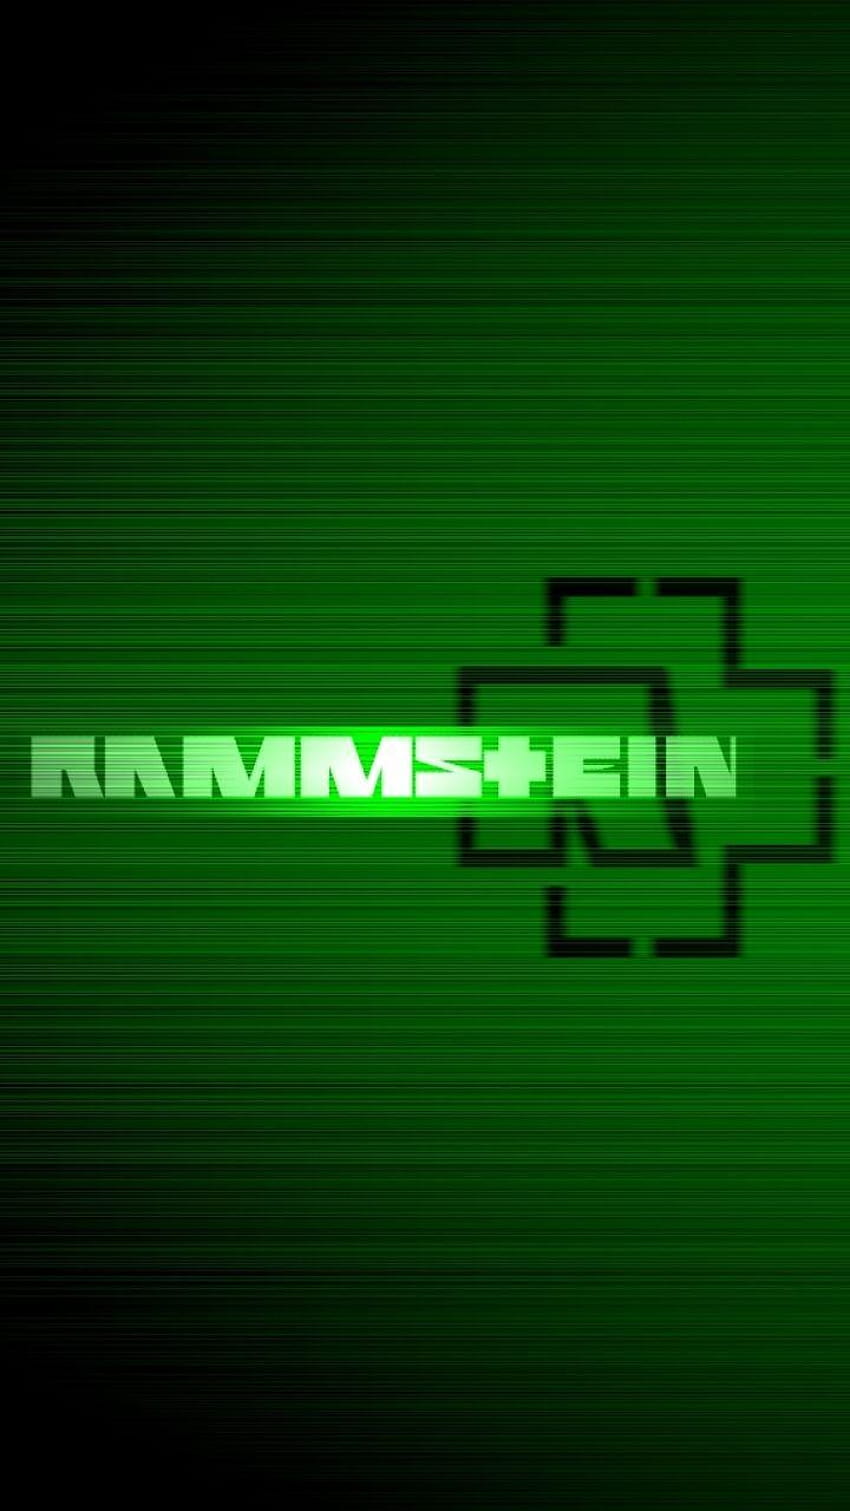 Música/Rammstein, logotipo do rammstein Papel de parede de celular HD